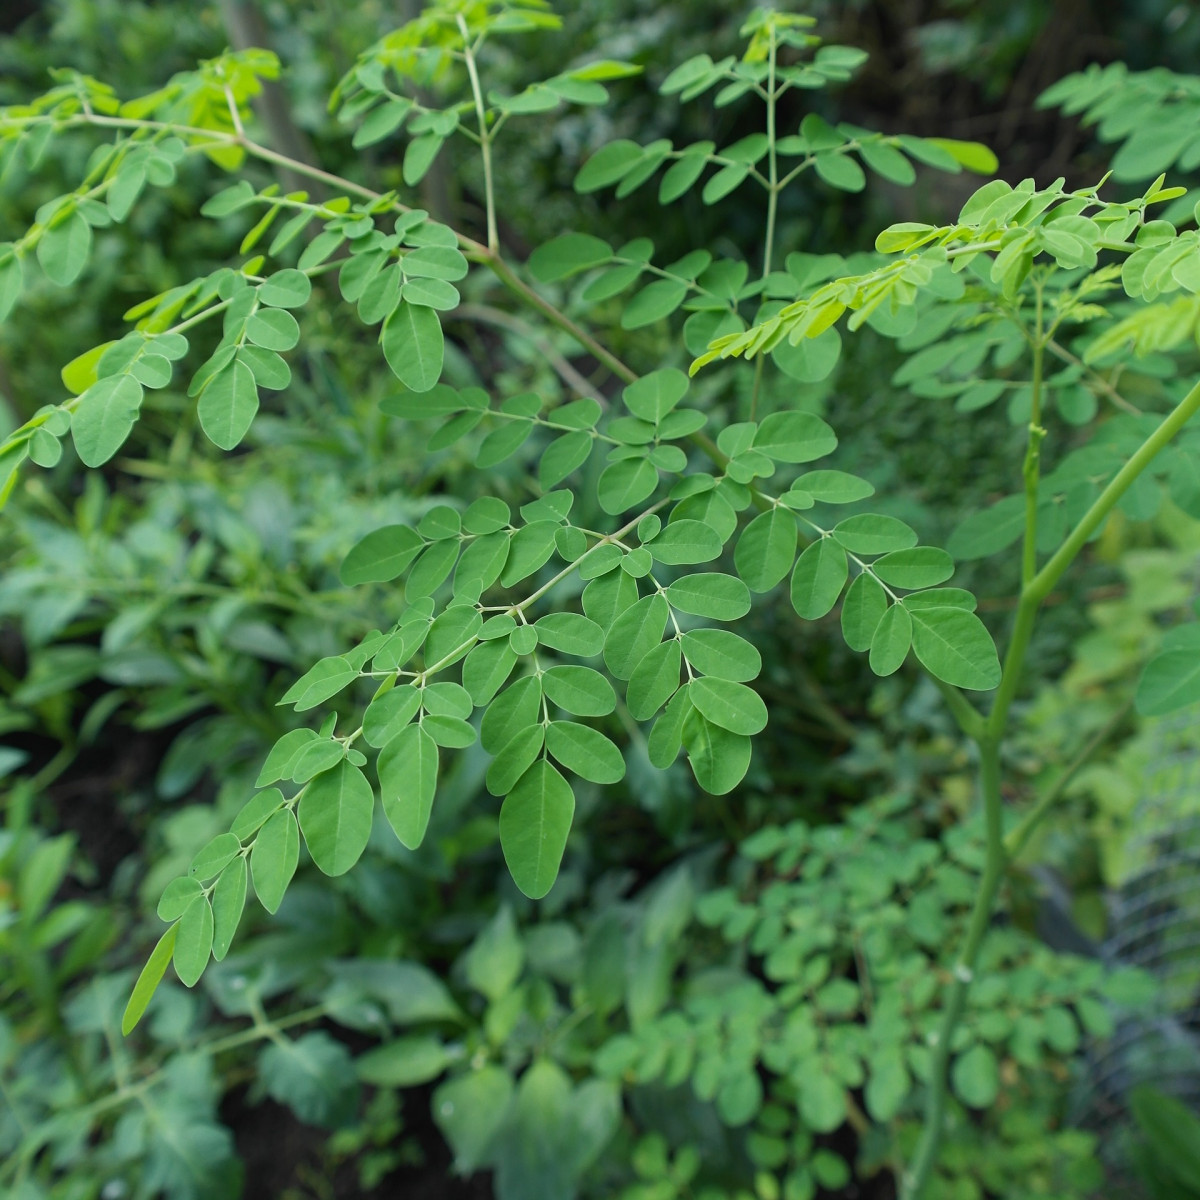 Foliage of Moringa oleifera